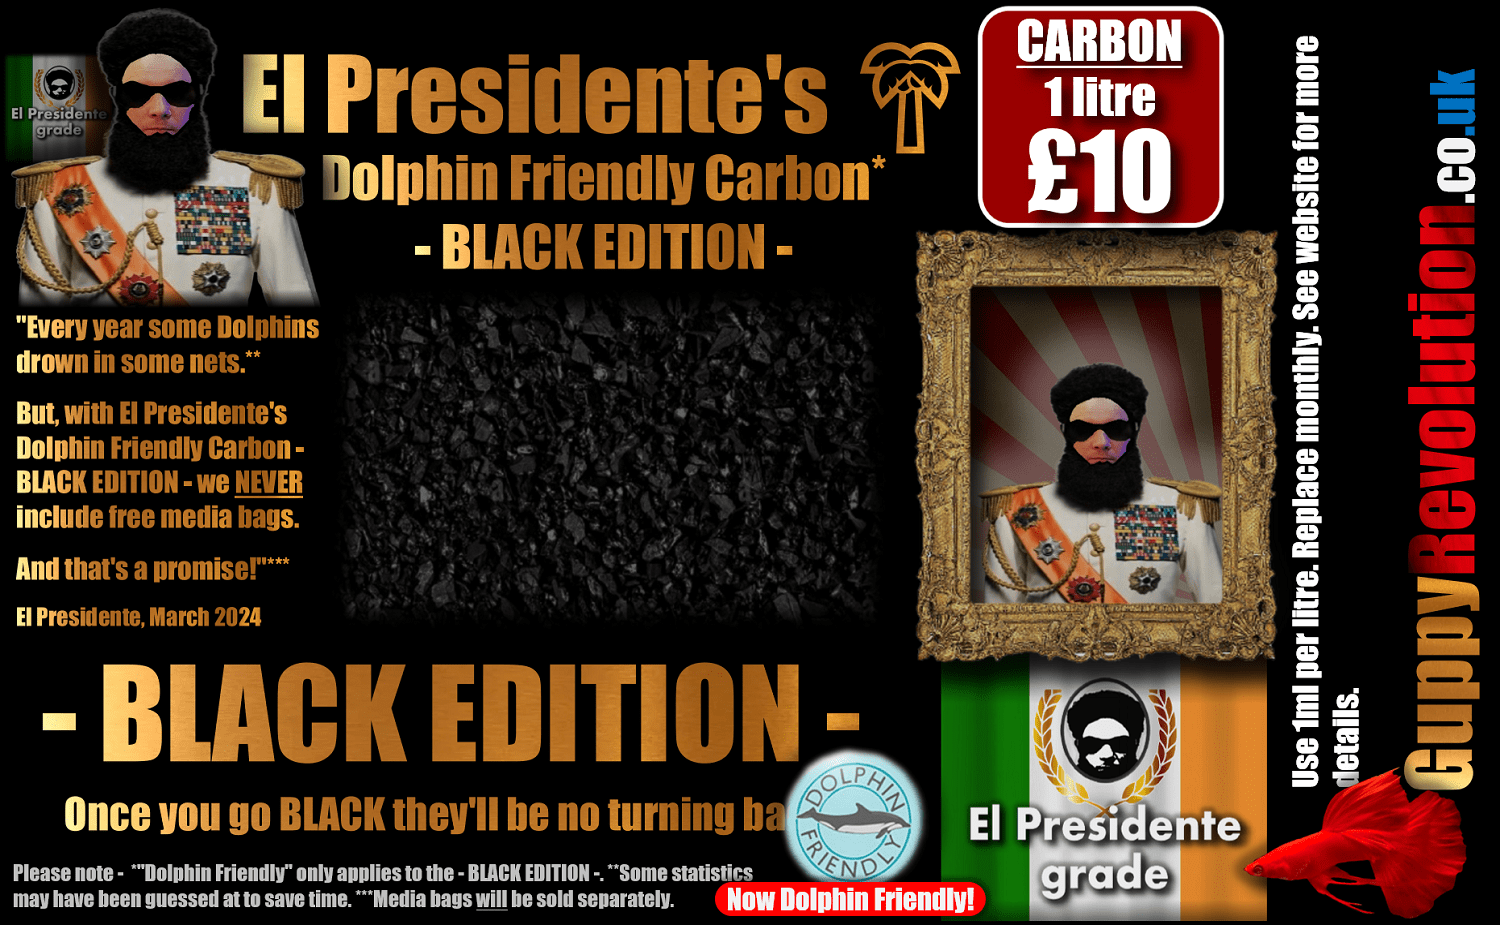 = PRODUCT El Presidente's Dolphin Friendly Carbon - BLACK EDITION - 1 litre £10 1500px x 925px png comp.png